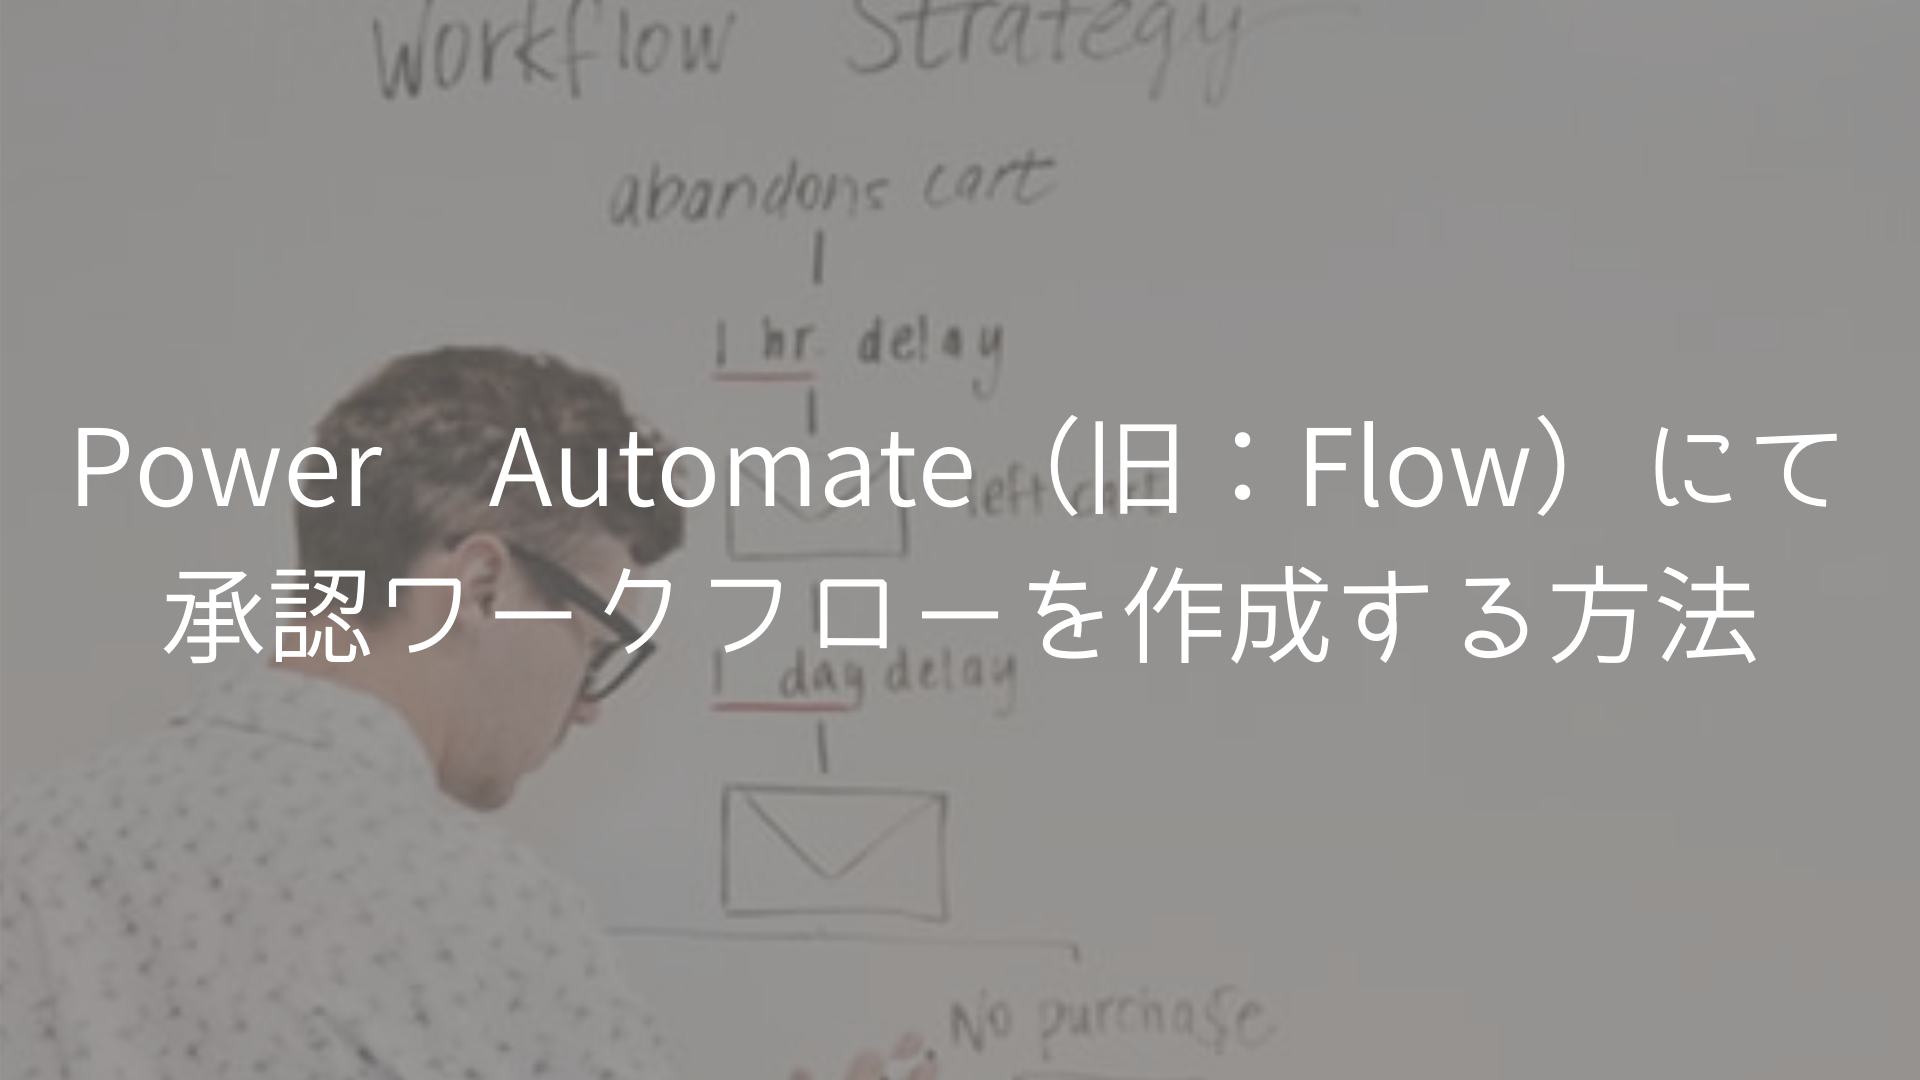 Power Automate 旧 Flow にて承認ワークフローを作成する方法 簡単 お手軽 ぽんこつｓｅの無事是名馬